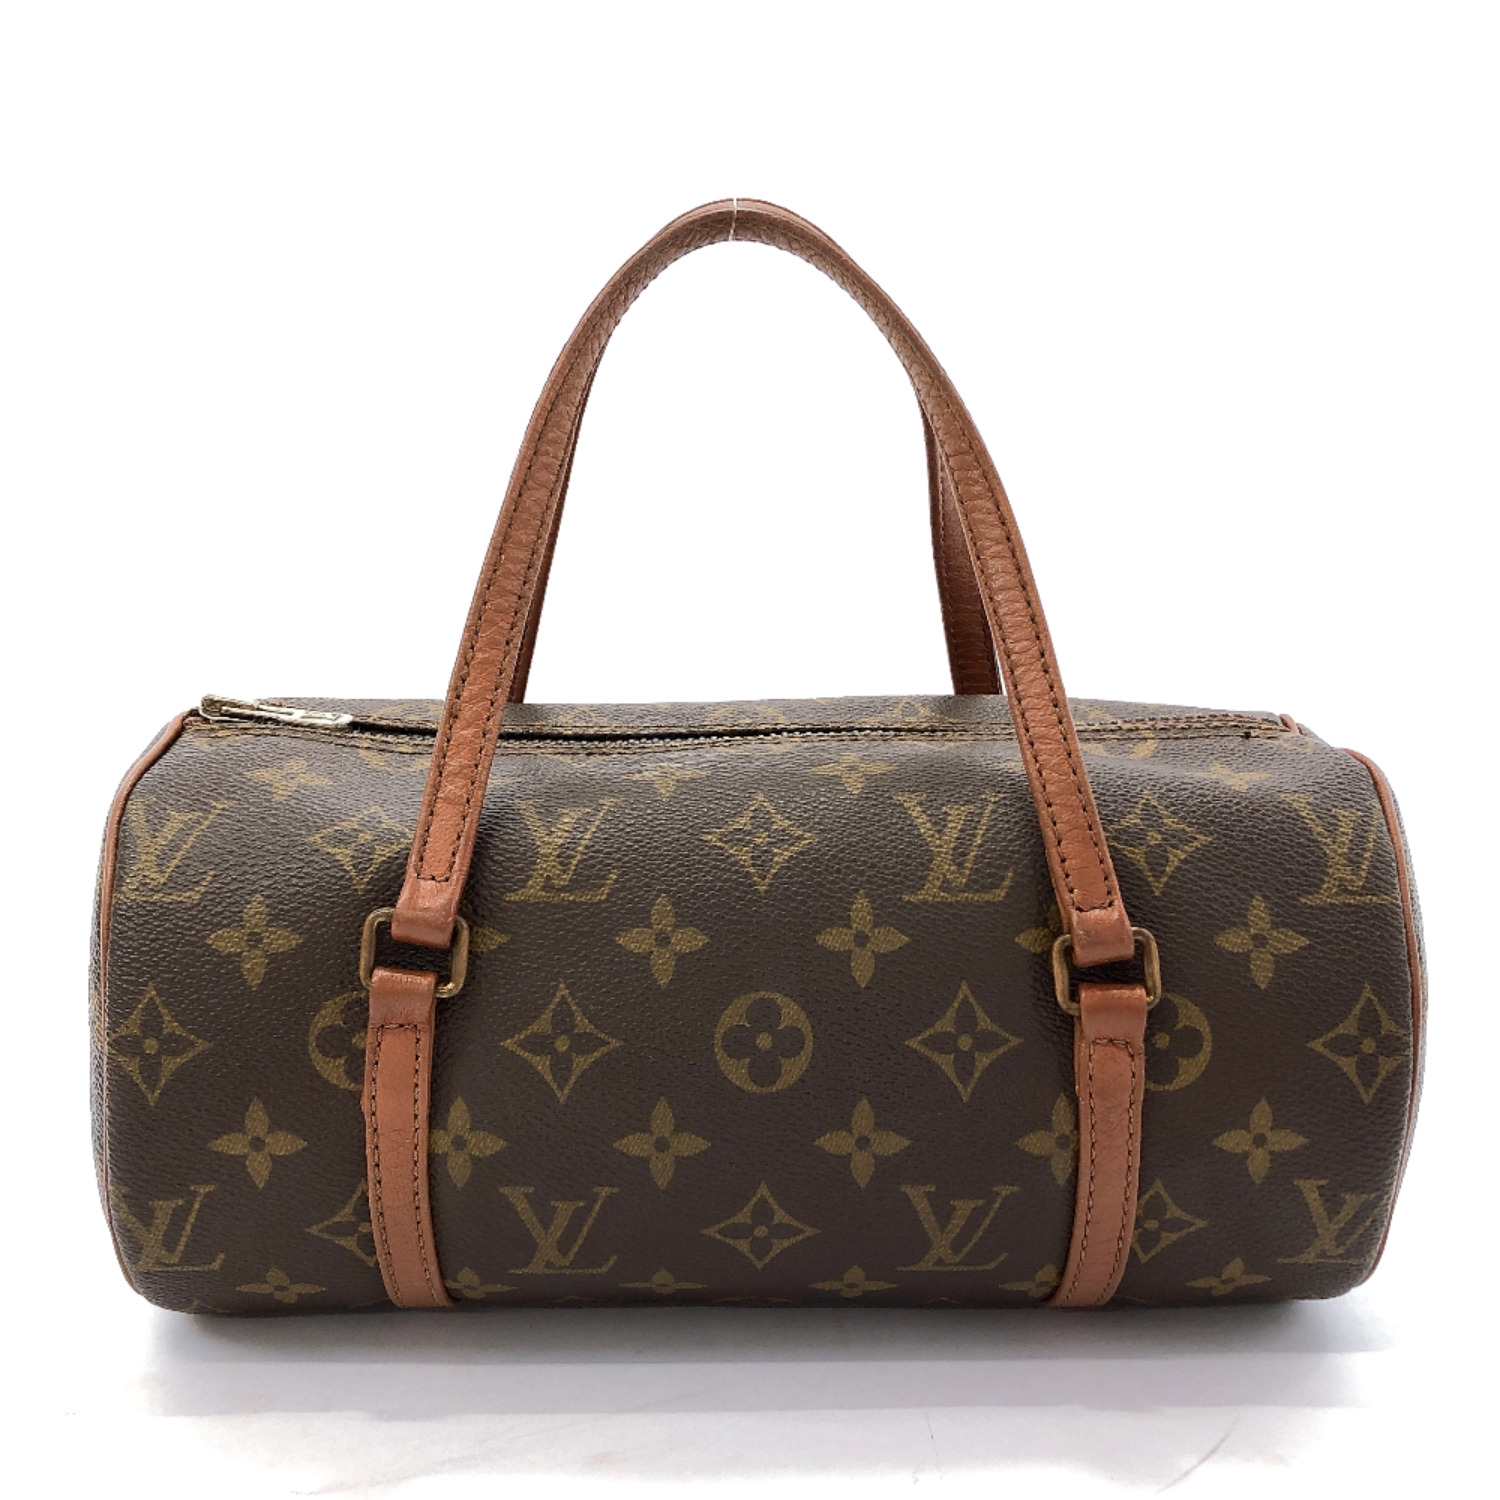 Kylie Jenner's Baby Rocks $2k Louis Vuitton Bag